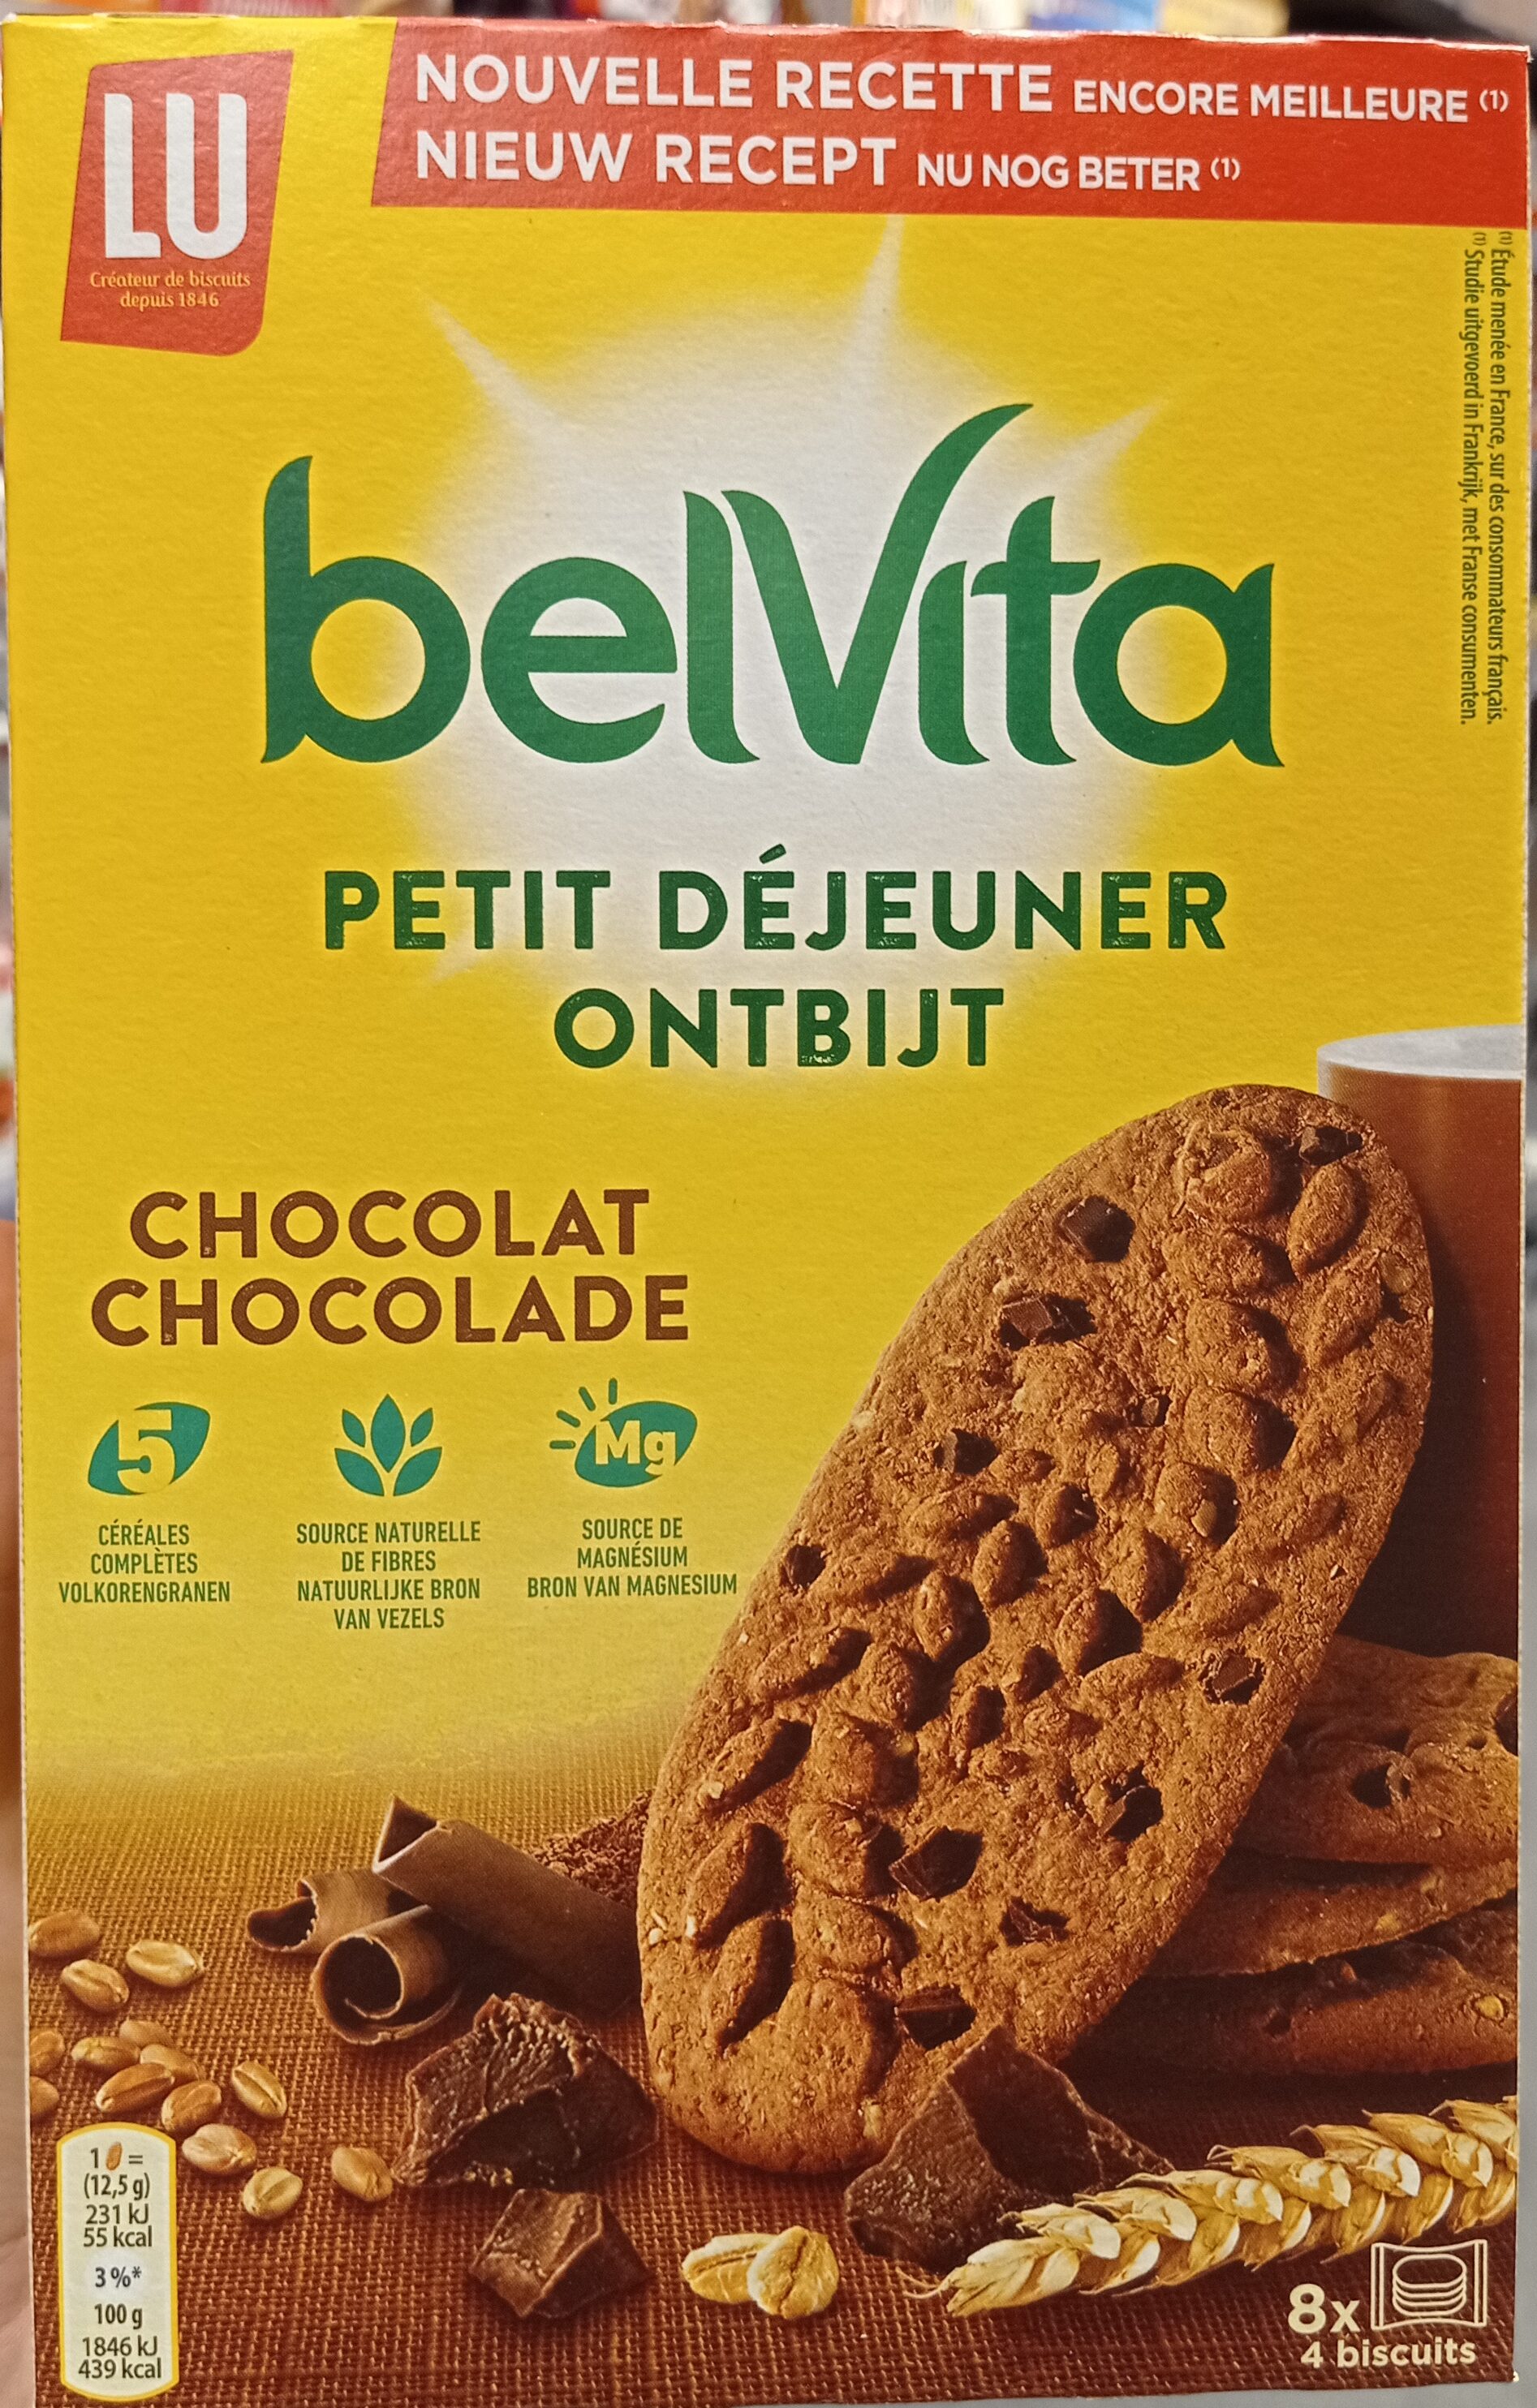 Belvita Petit Déjeuner Chocolat - Produit